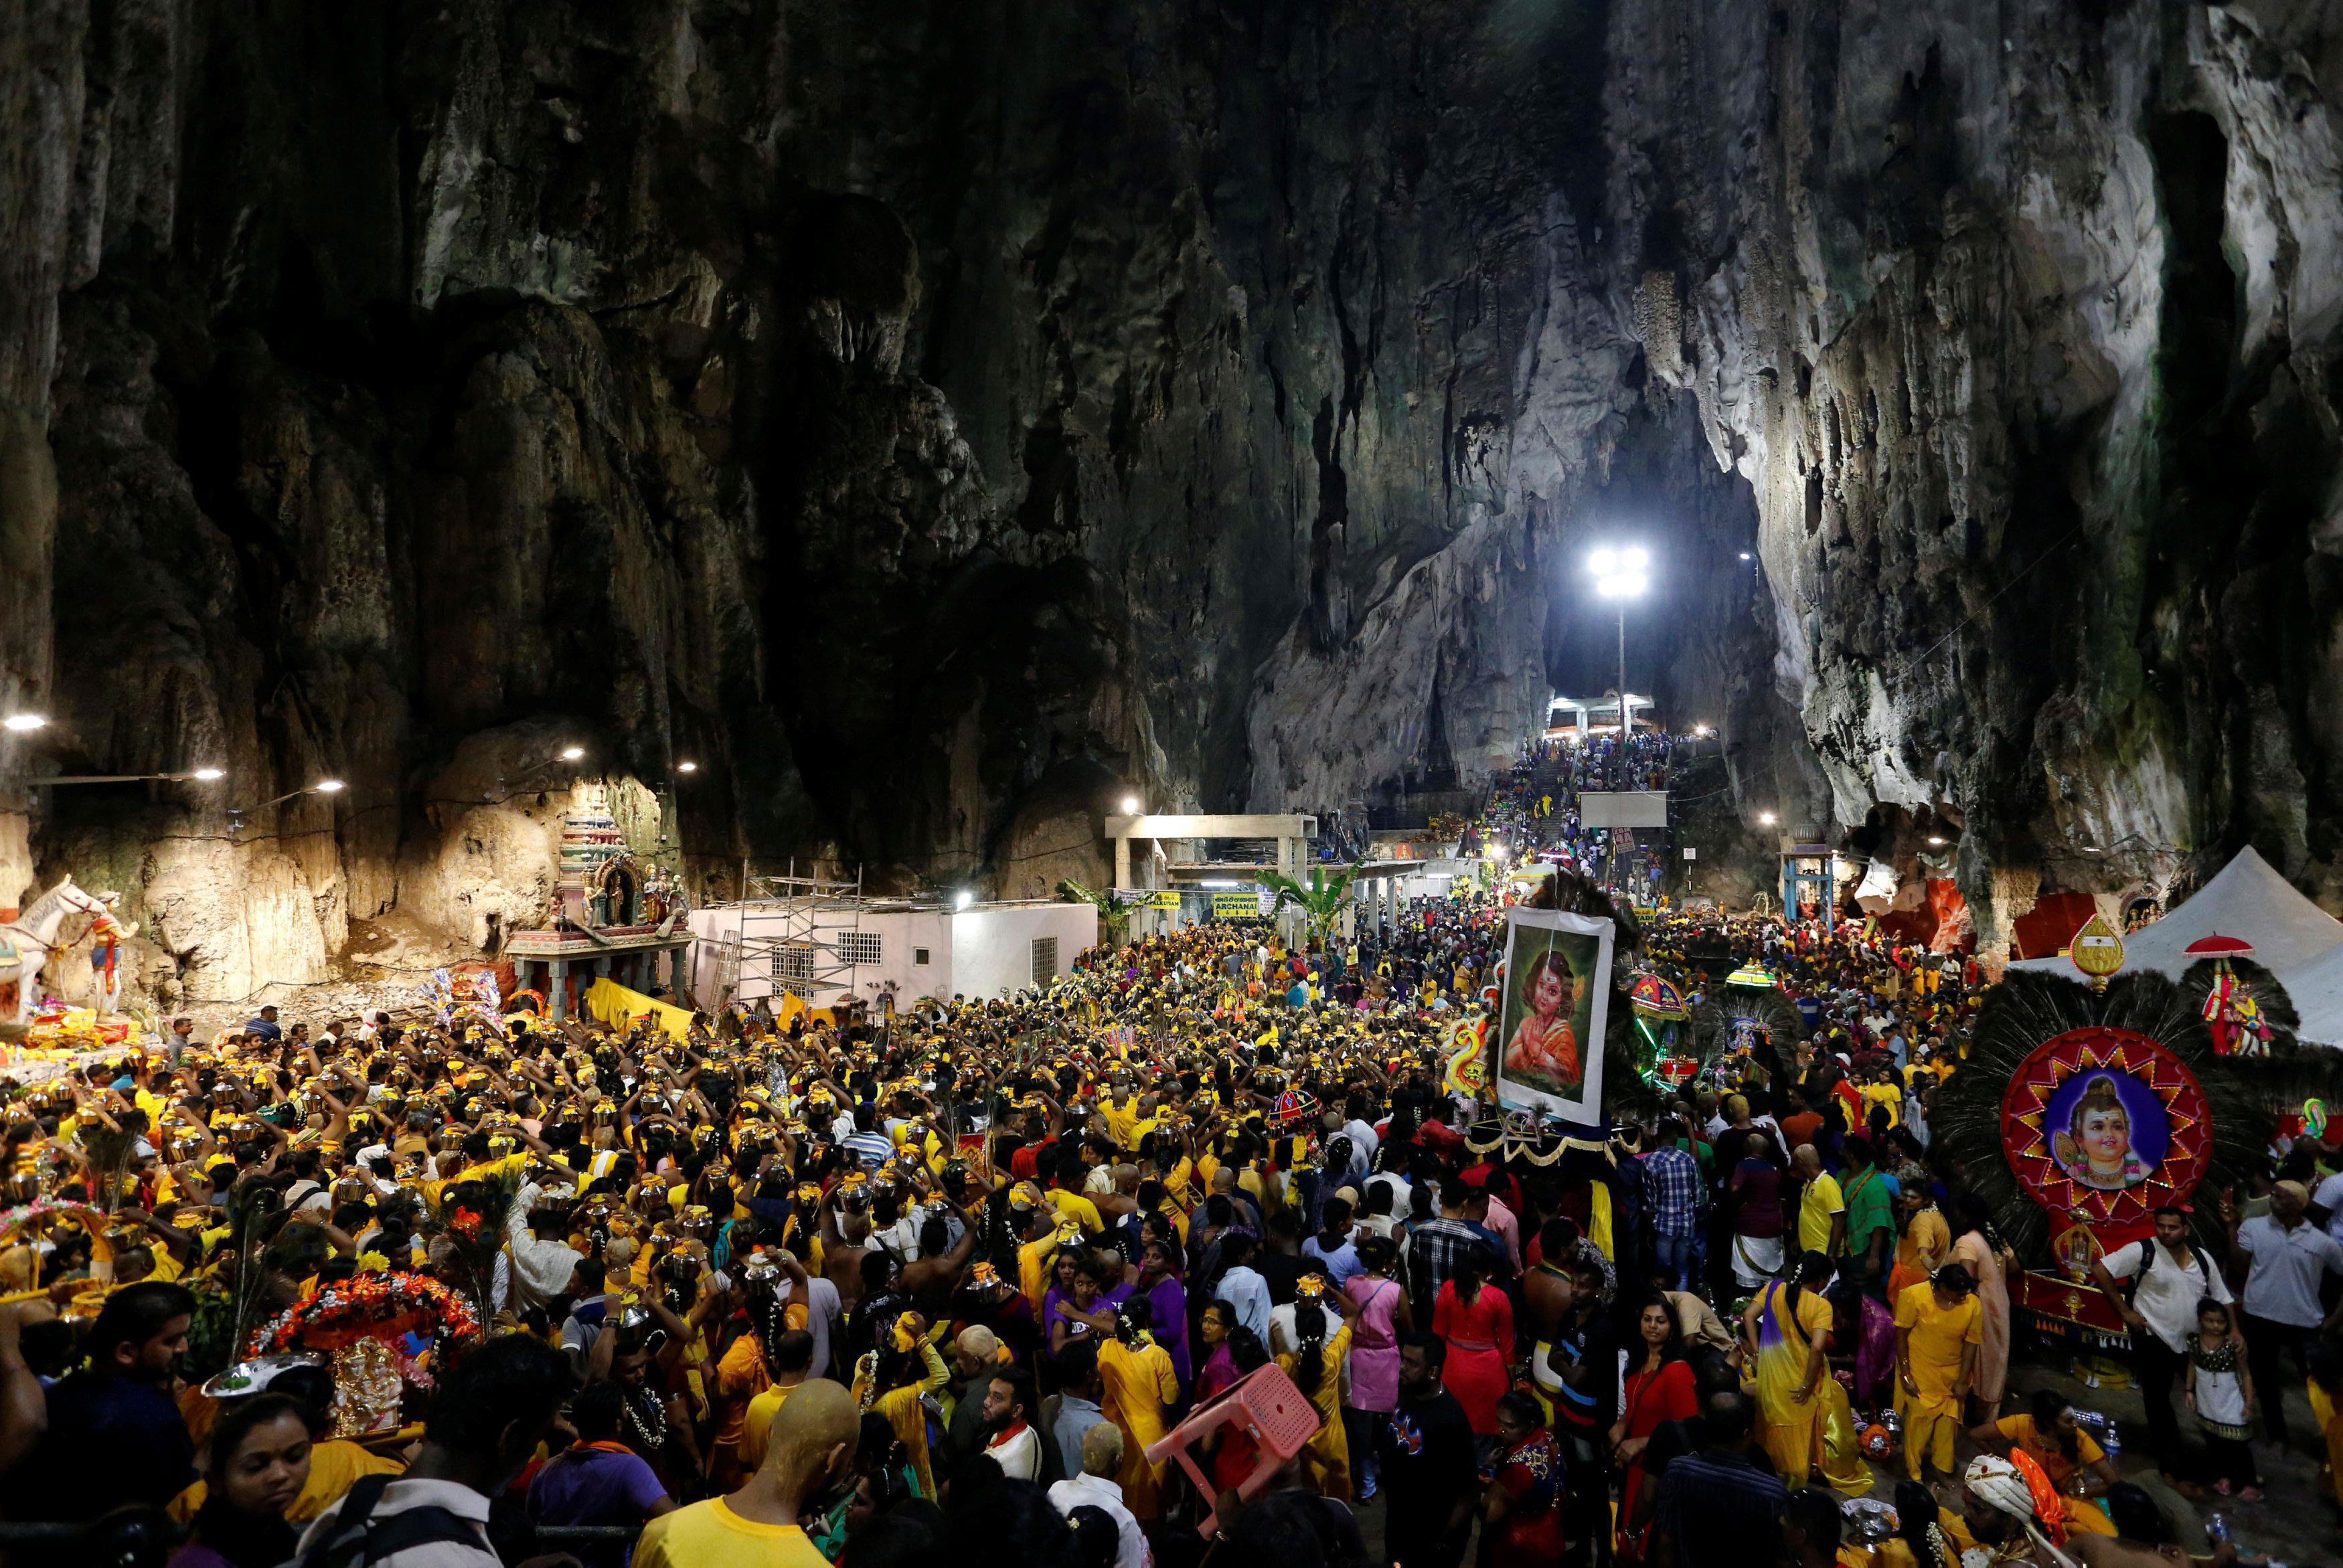 Devotees gather at a shrine in Batu Caves during the Hindu festival of Thaipusam in Kuala Lumpur